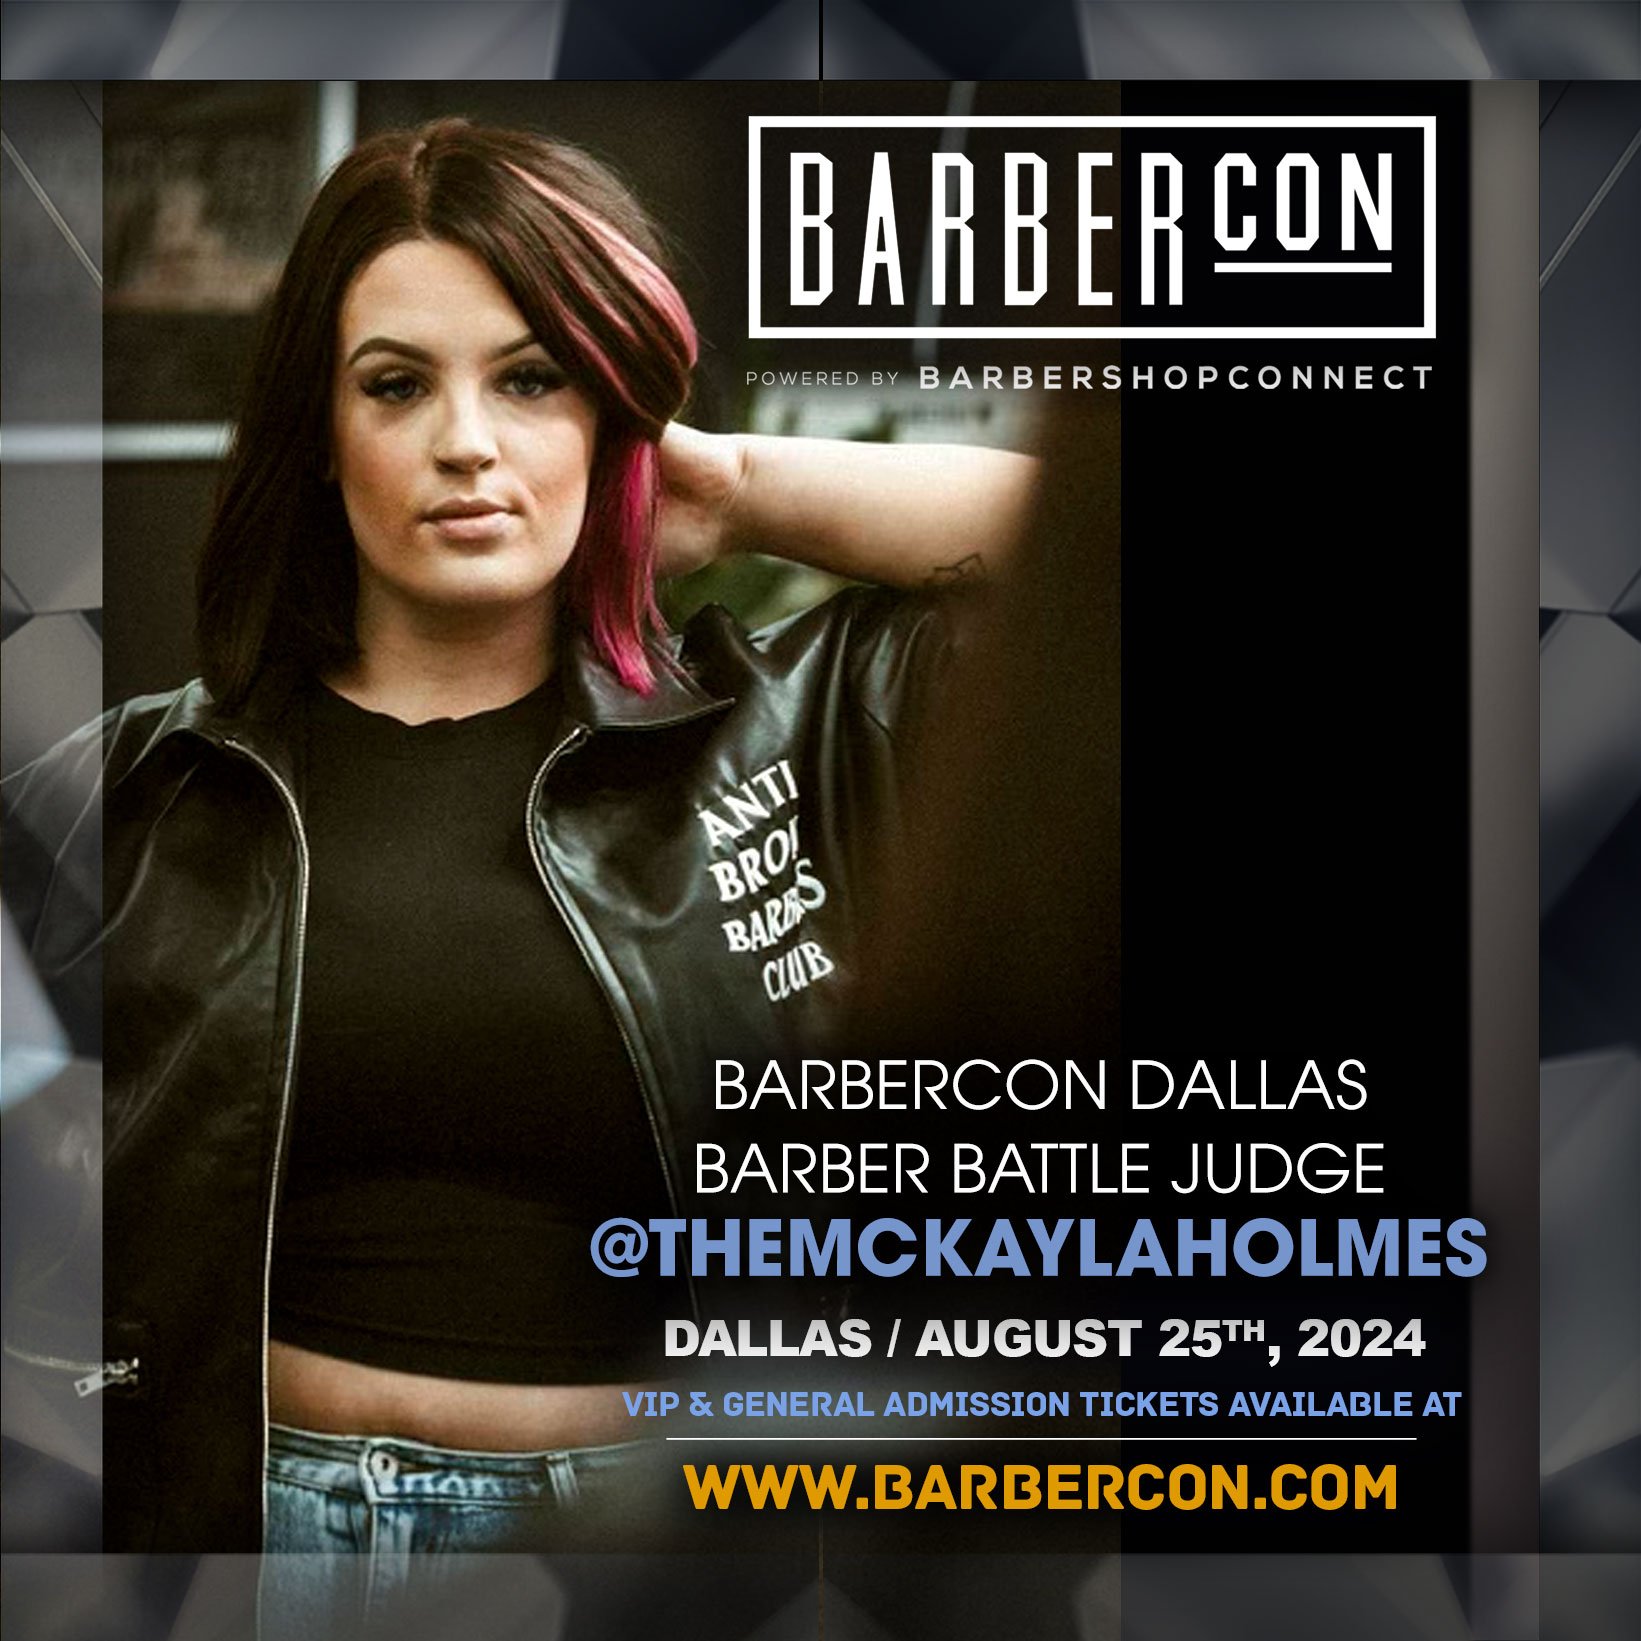 BC-Dallas-Barber-Battle-Judge-@themckaylaholmes.jpg